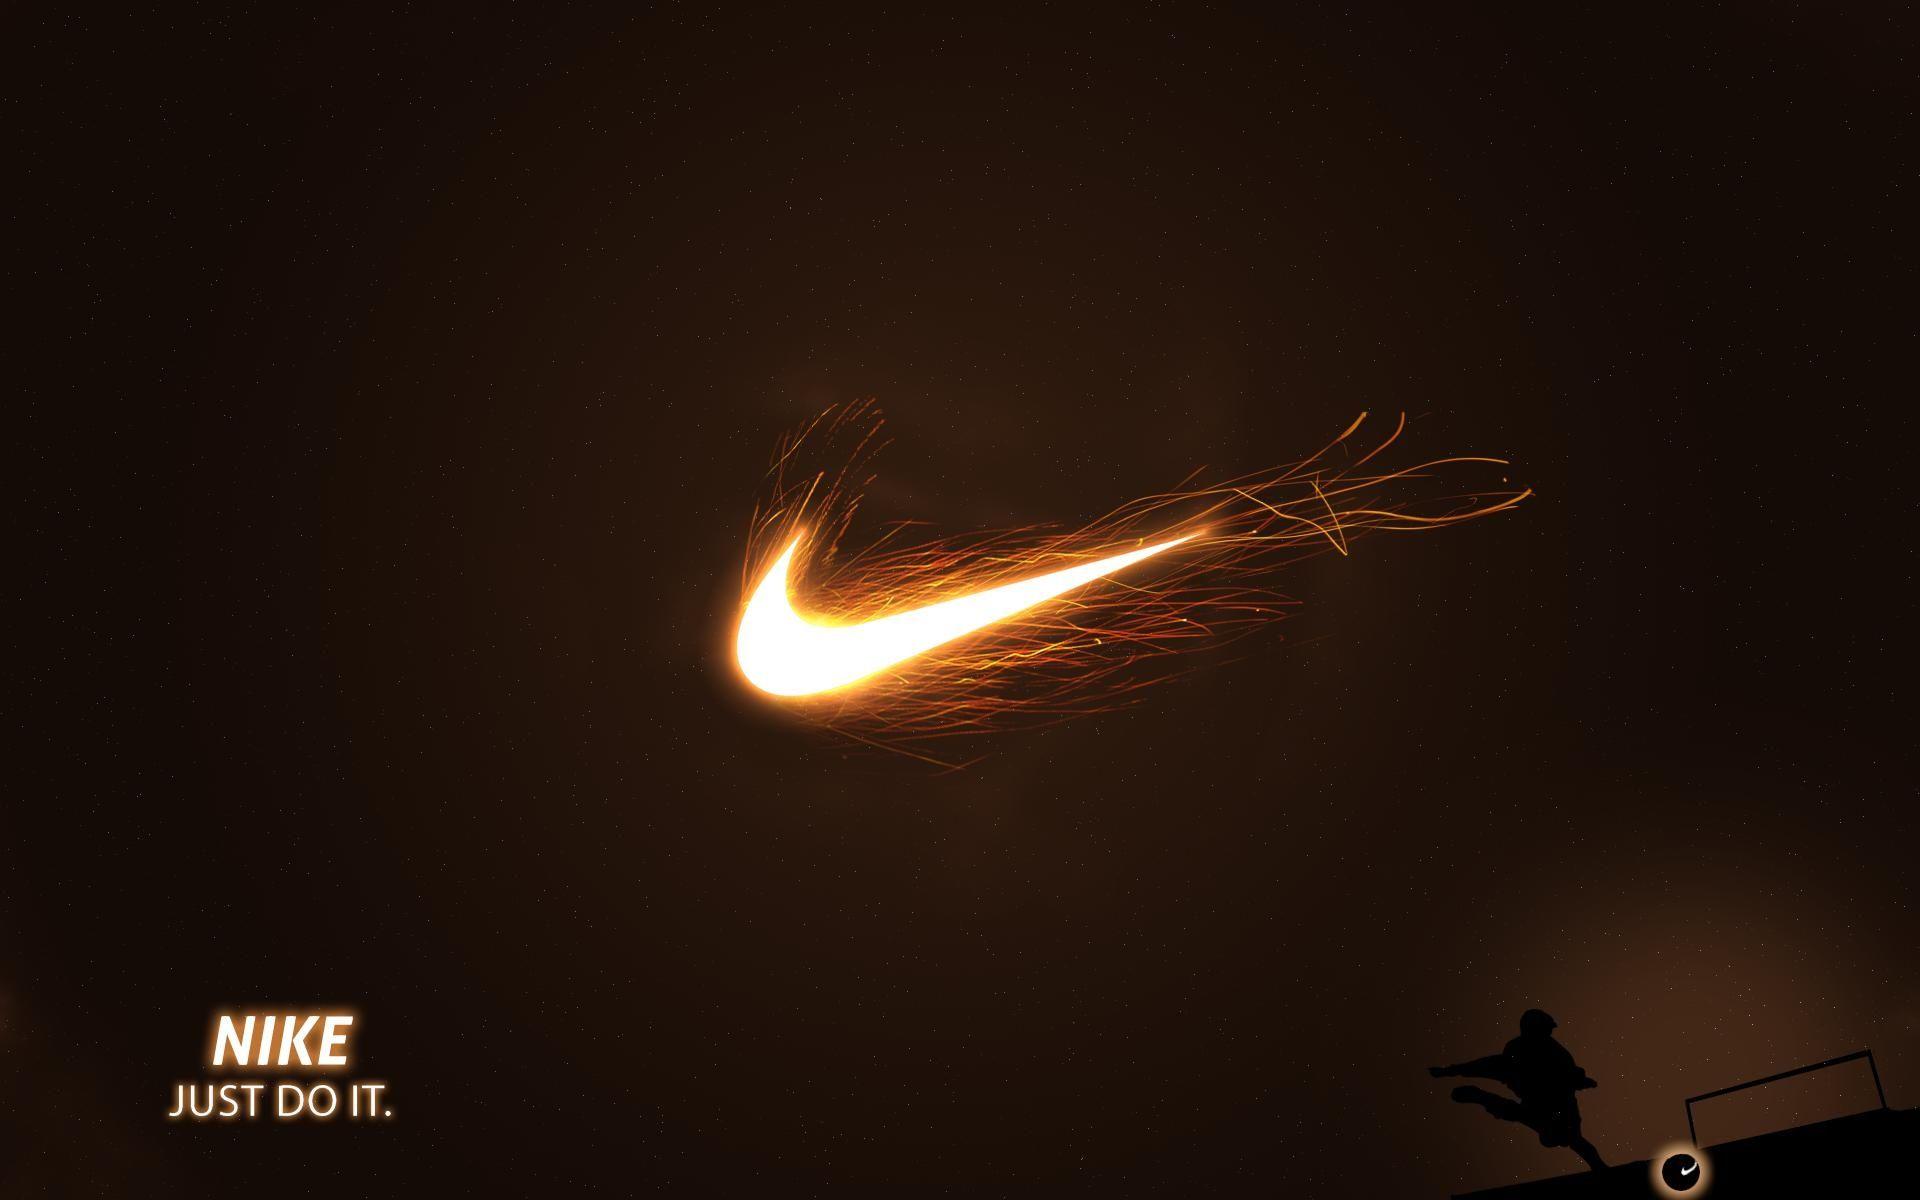 Nike Baseball Wallpaper